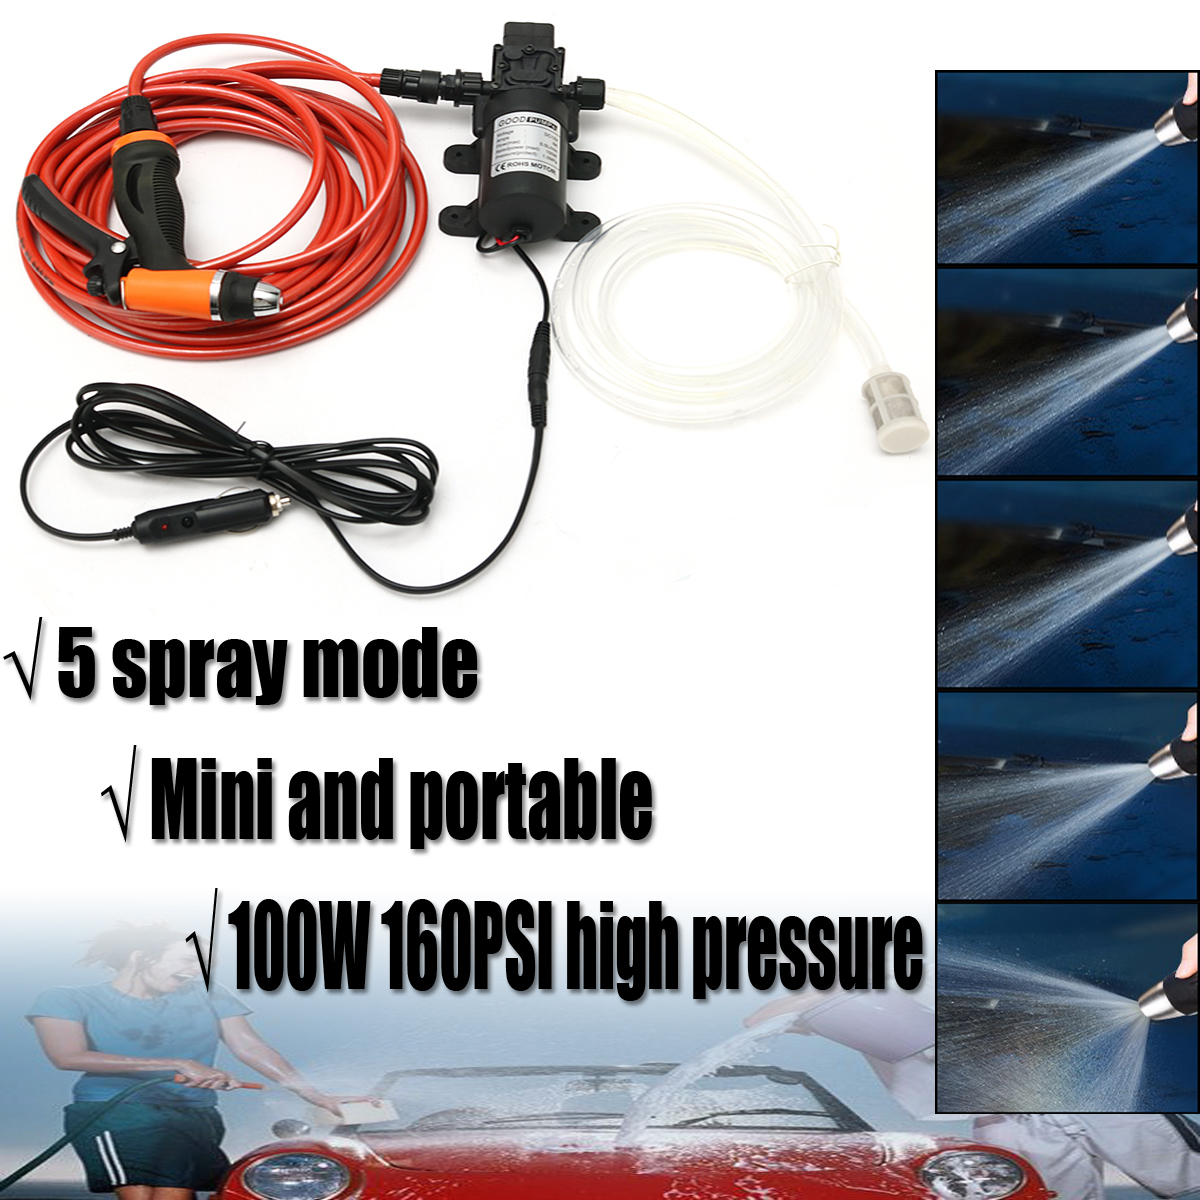 12V-Portable-100W-160PSI-High-Pressure-Car-Electric-Washer-Auto-Wash-Pump-Set-Tool-1165991